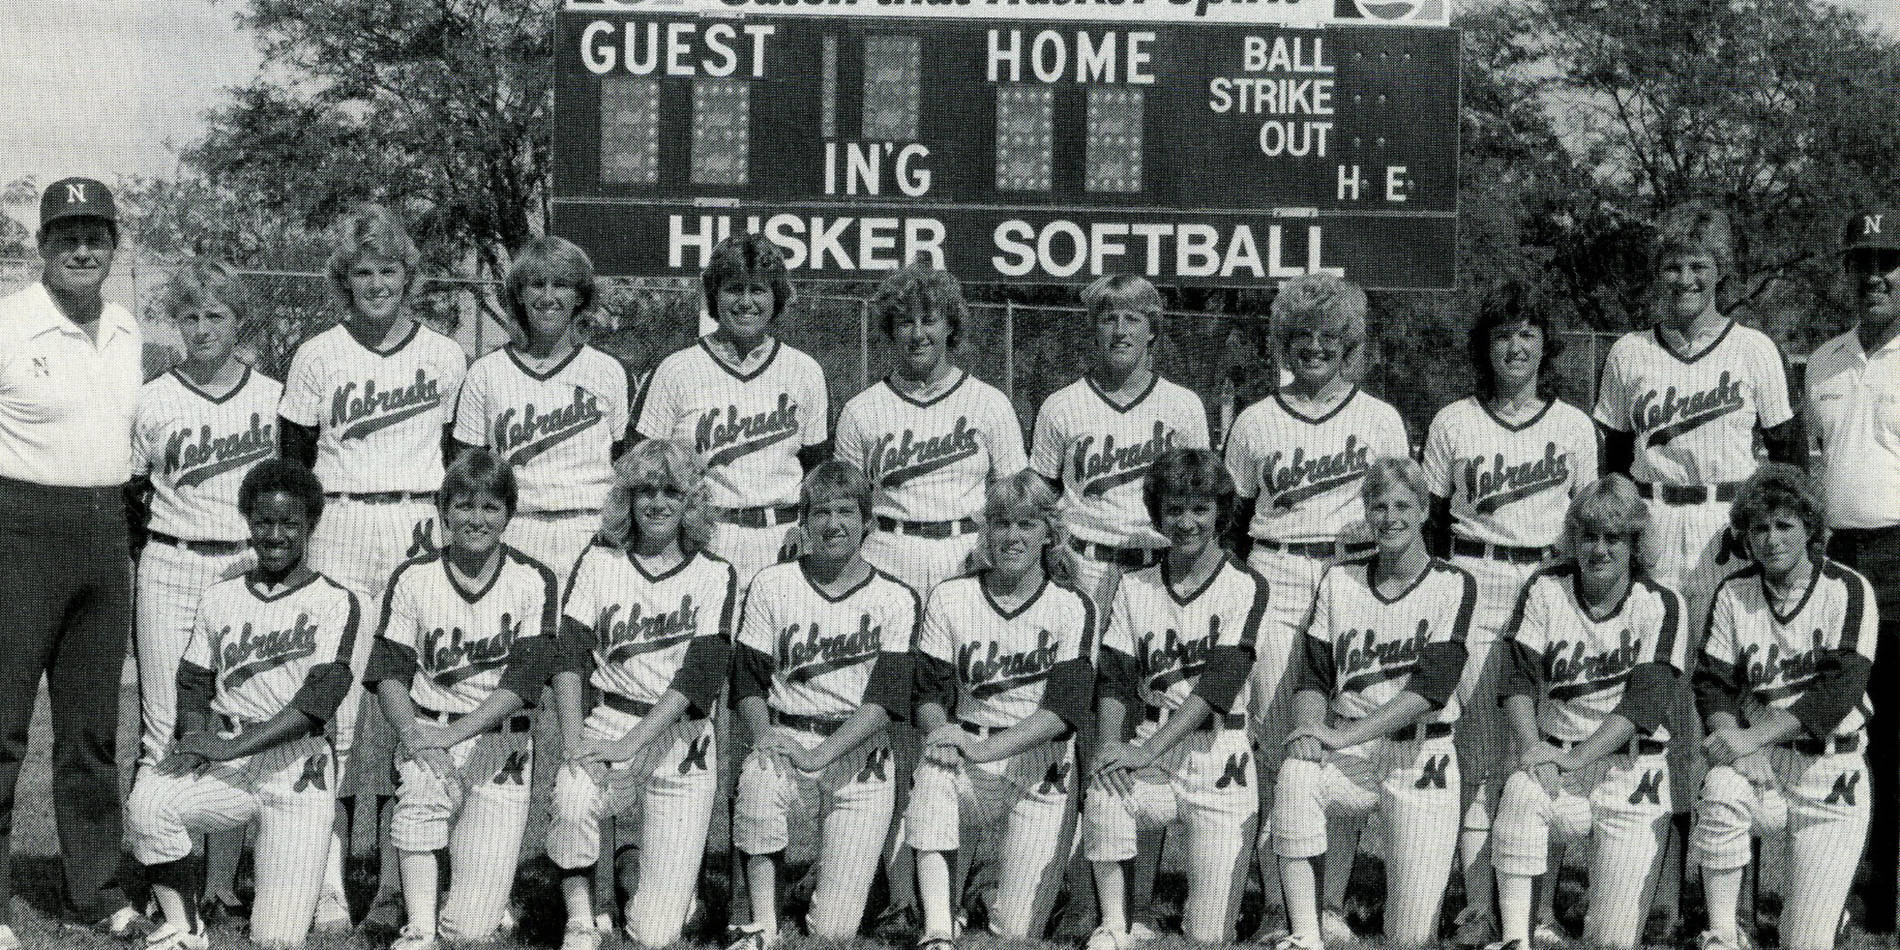 Pioneers Baseball & Softball Bundle